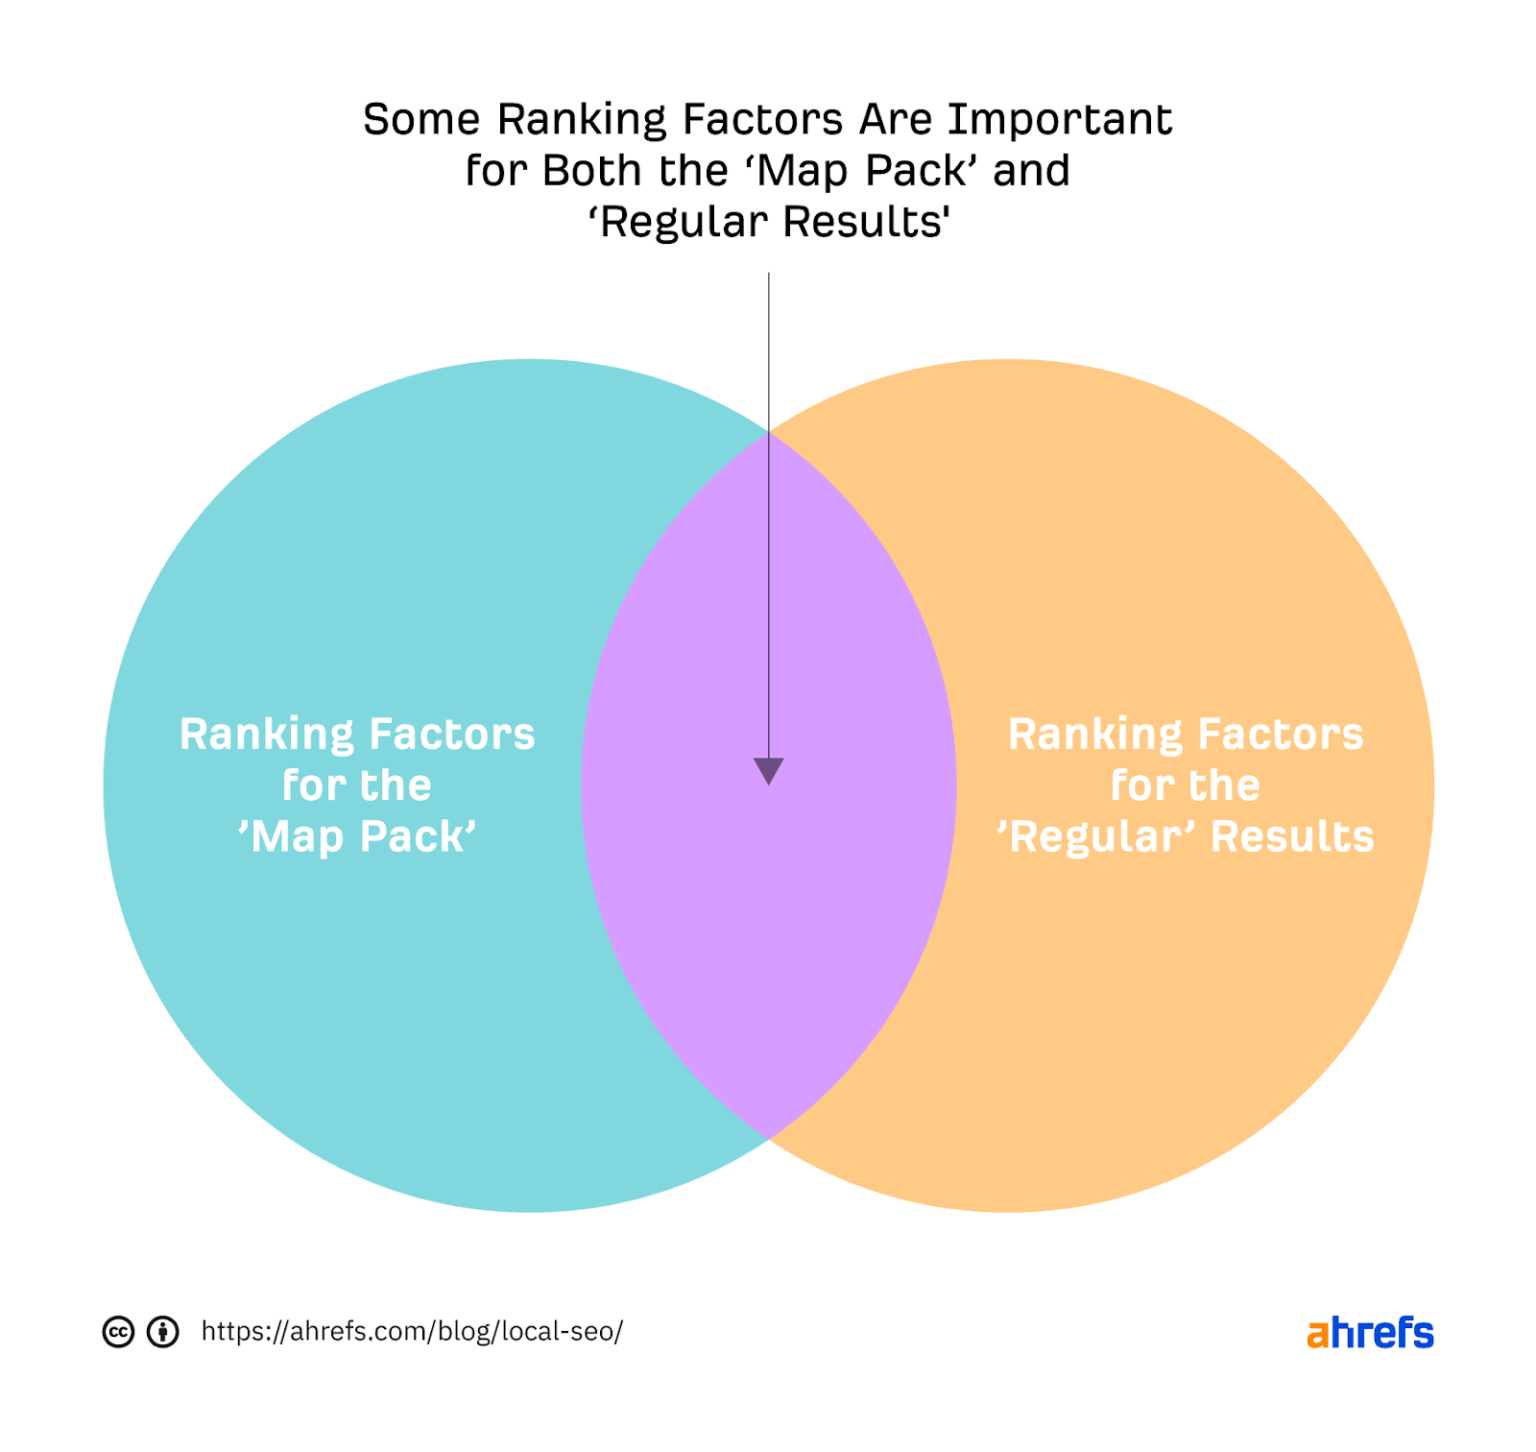 Ranking factors